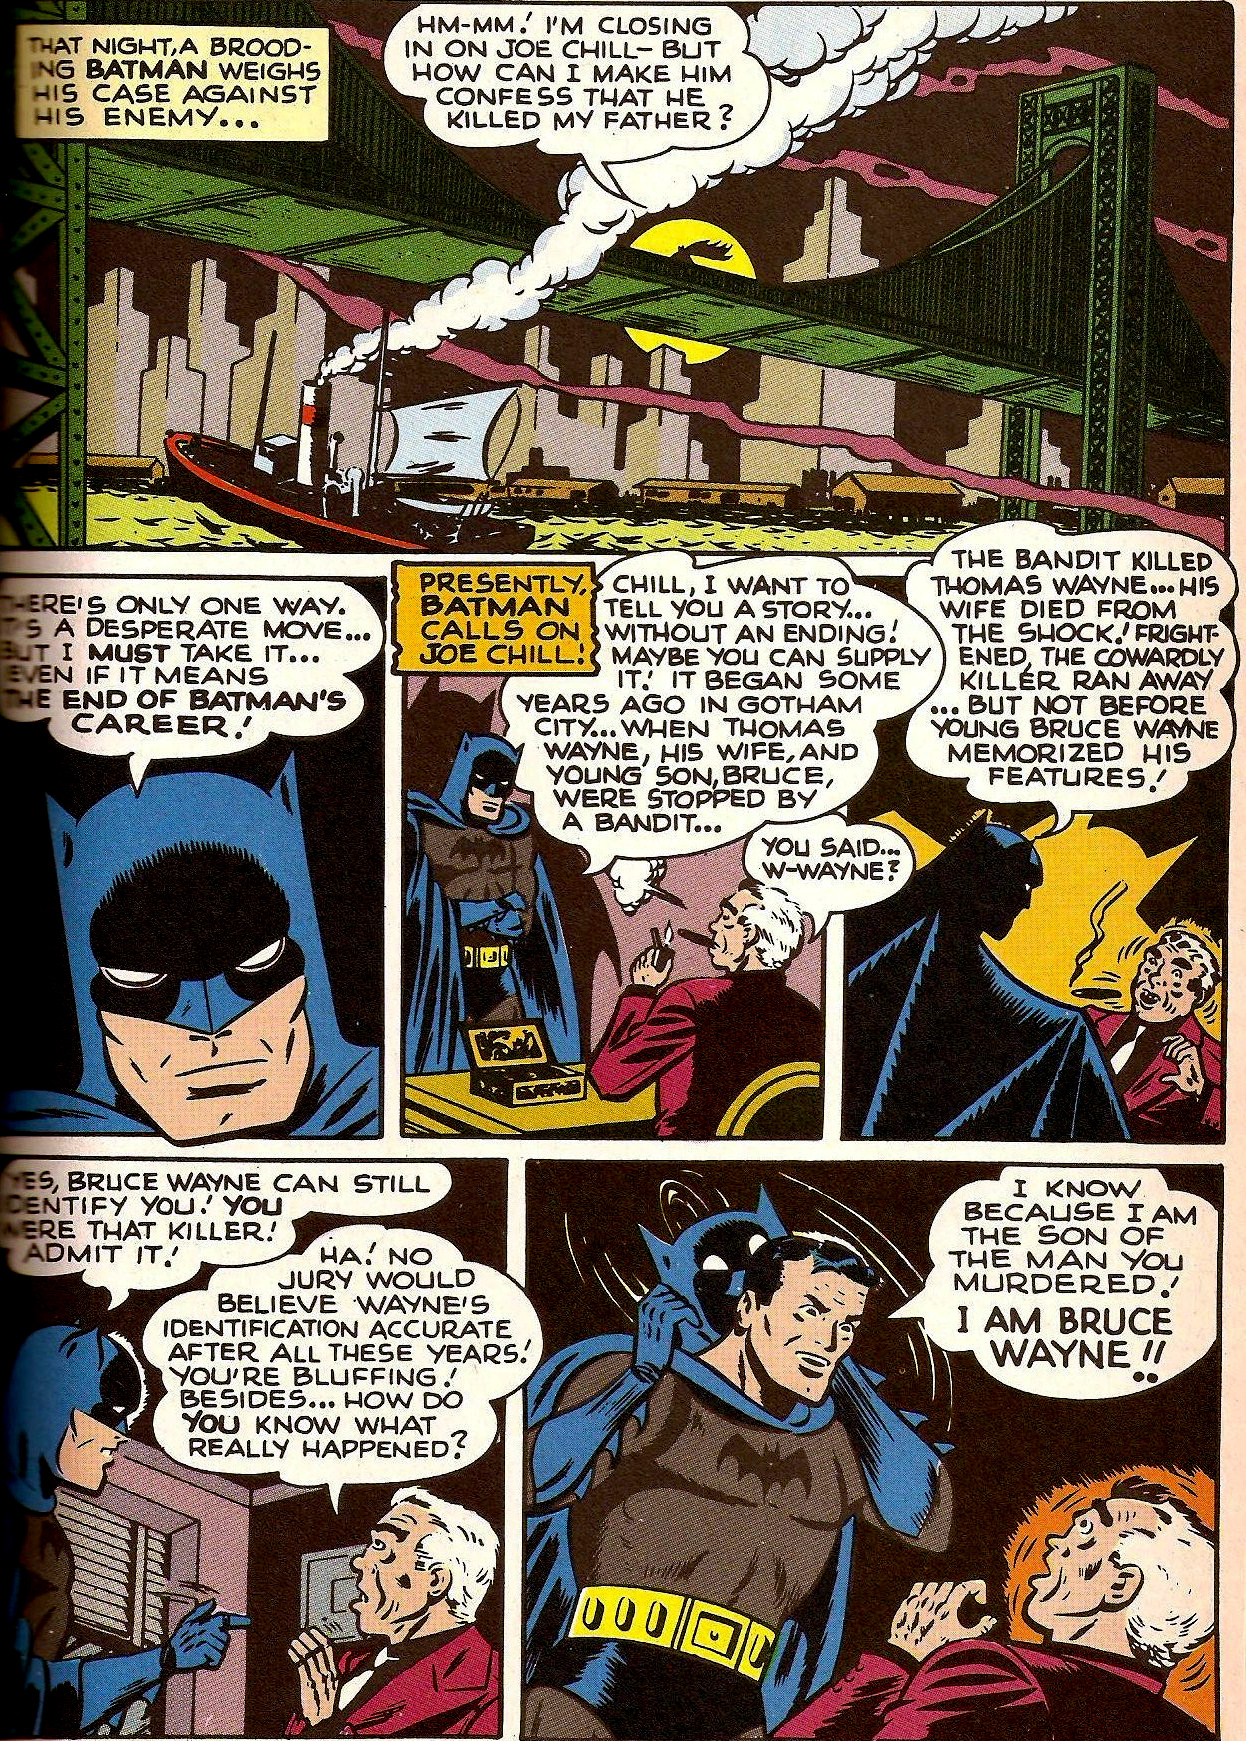 From Batman (Vol. 1) #47 (1948)